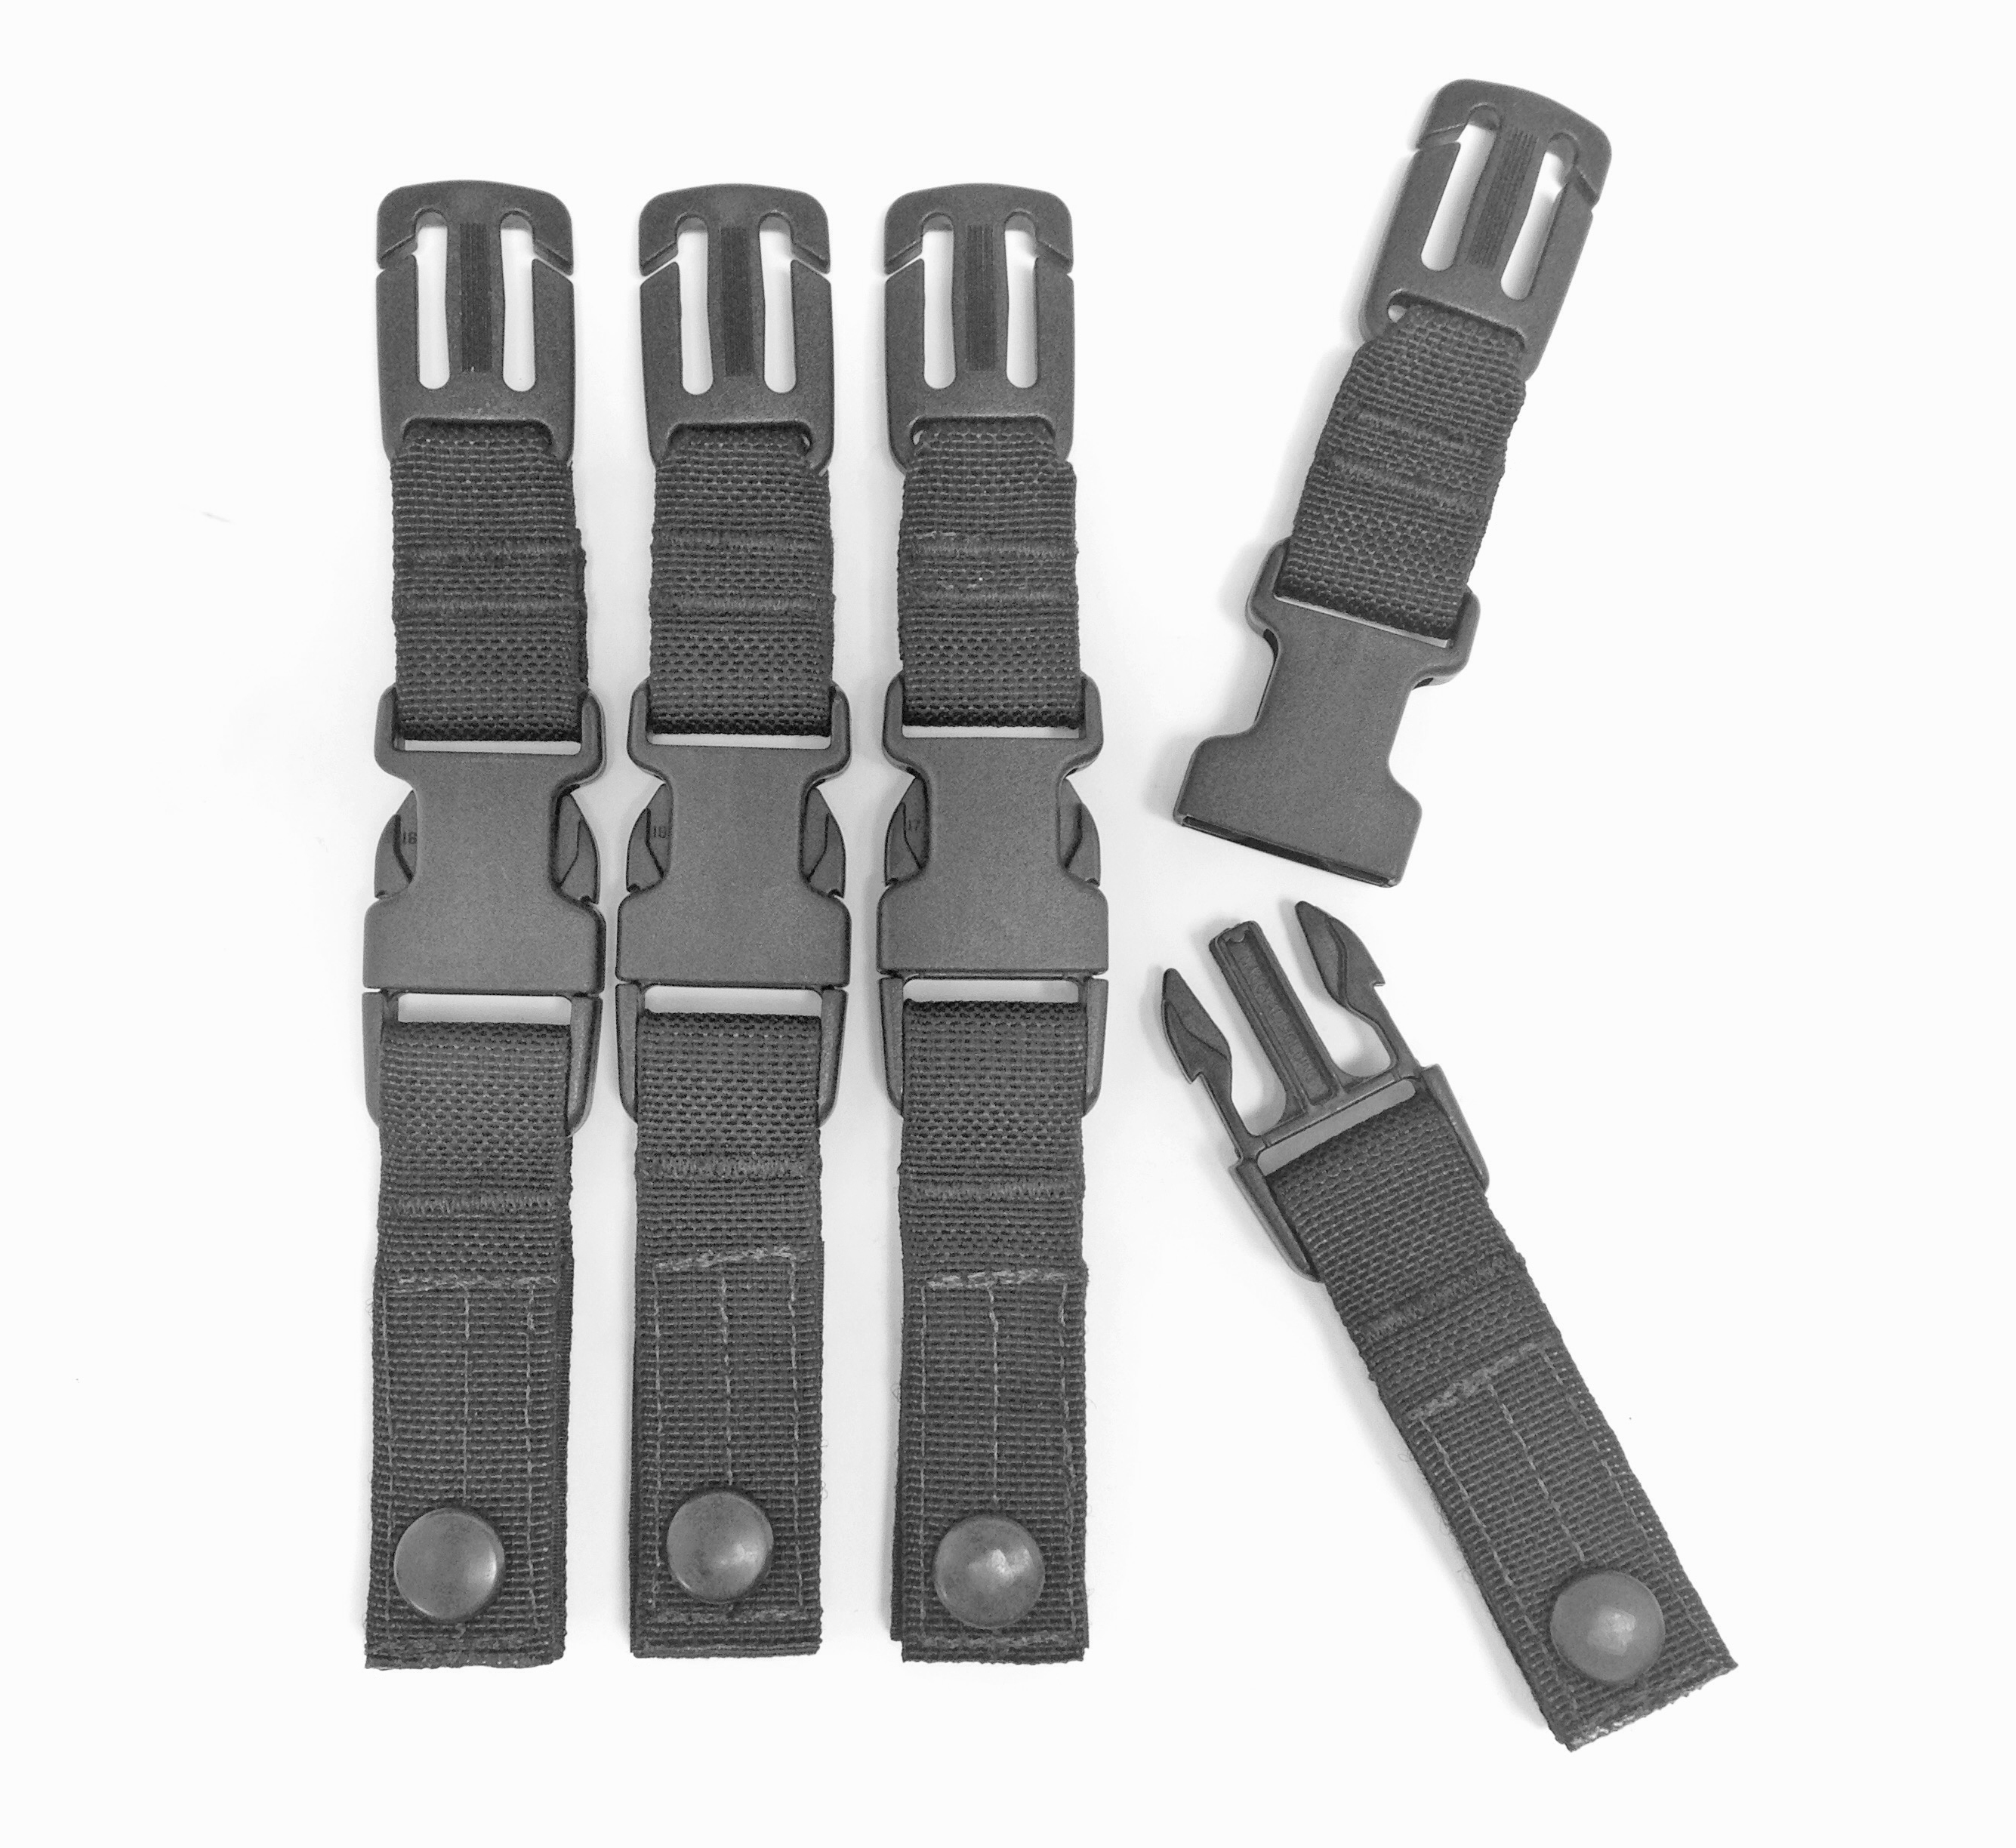 https://specops.us/sites/default/files/tactical-vest-duty-belt-hangers-black.jpg